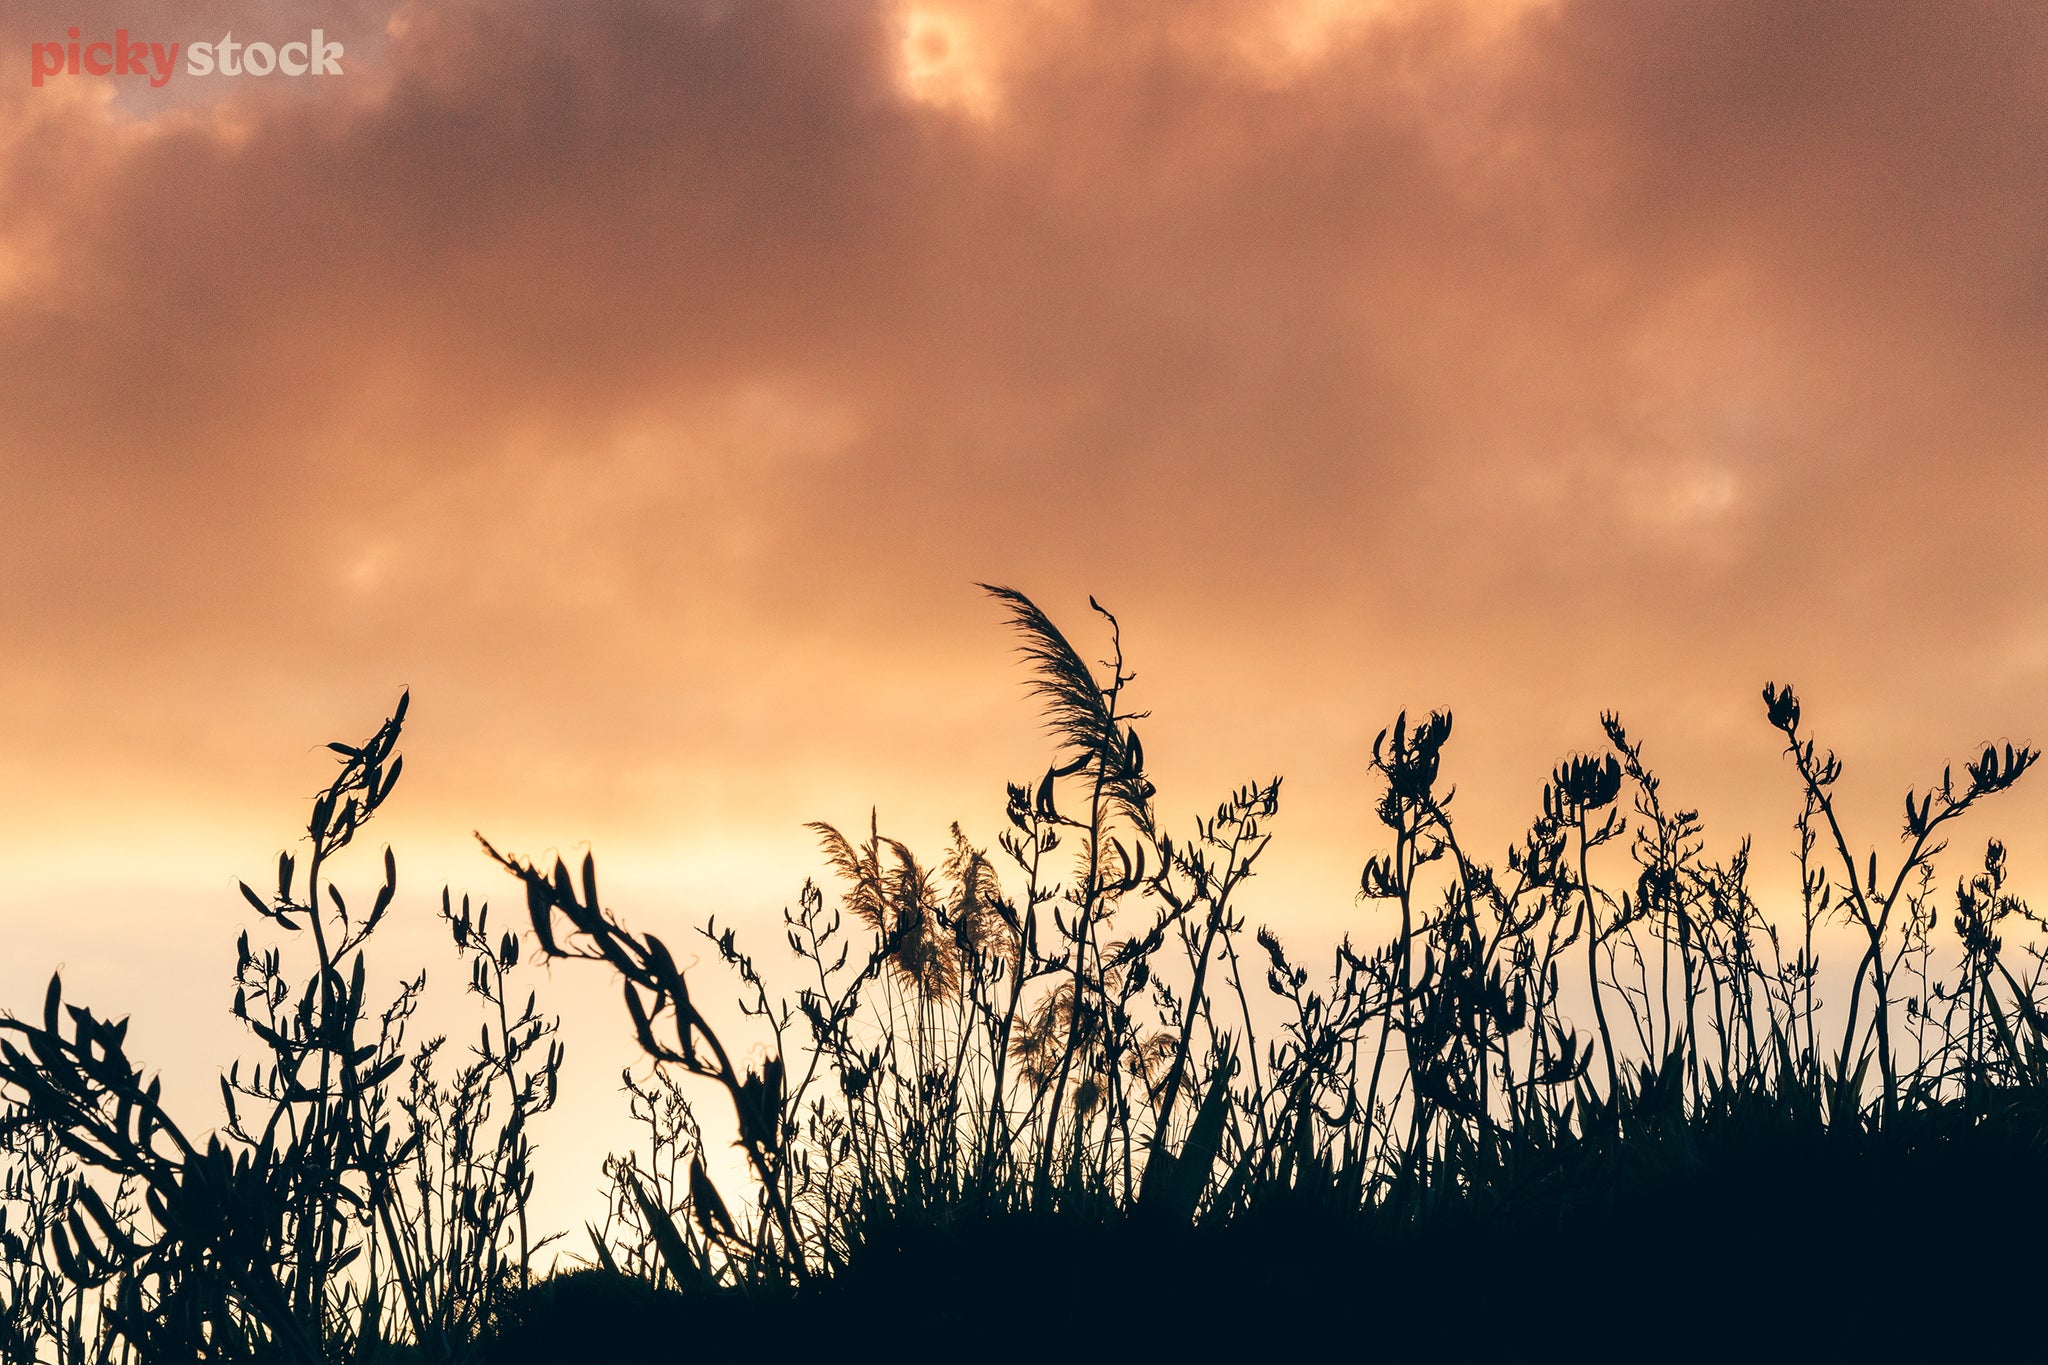 Landscape of a cloudy orange sky, the sun casts a sharp black silhouette of flax.